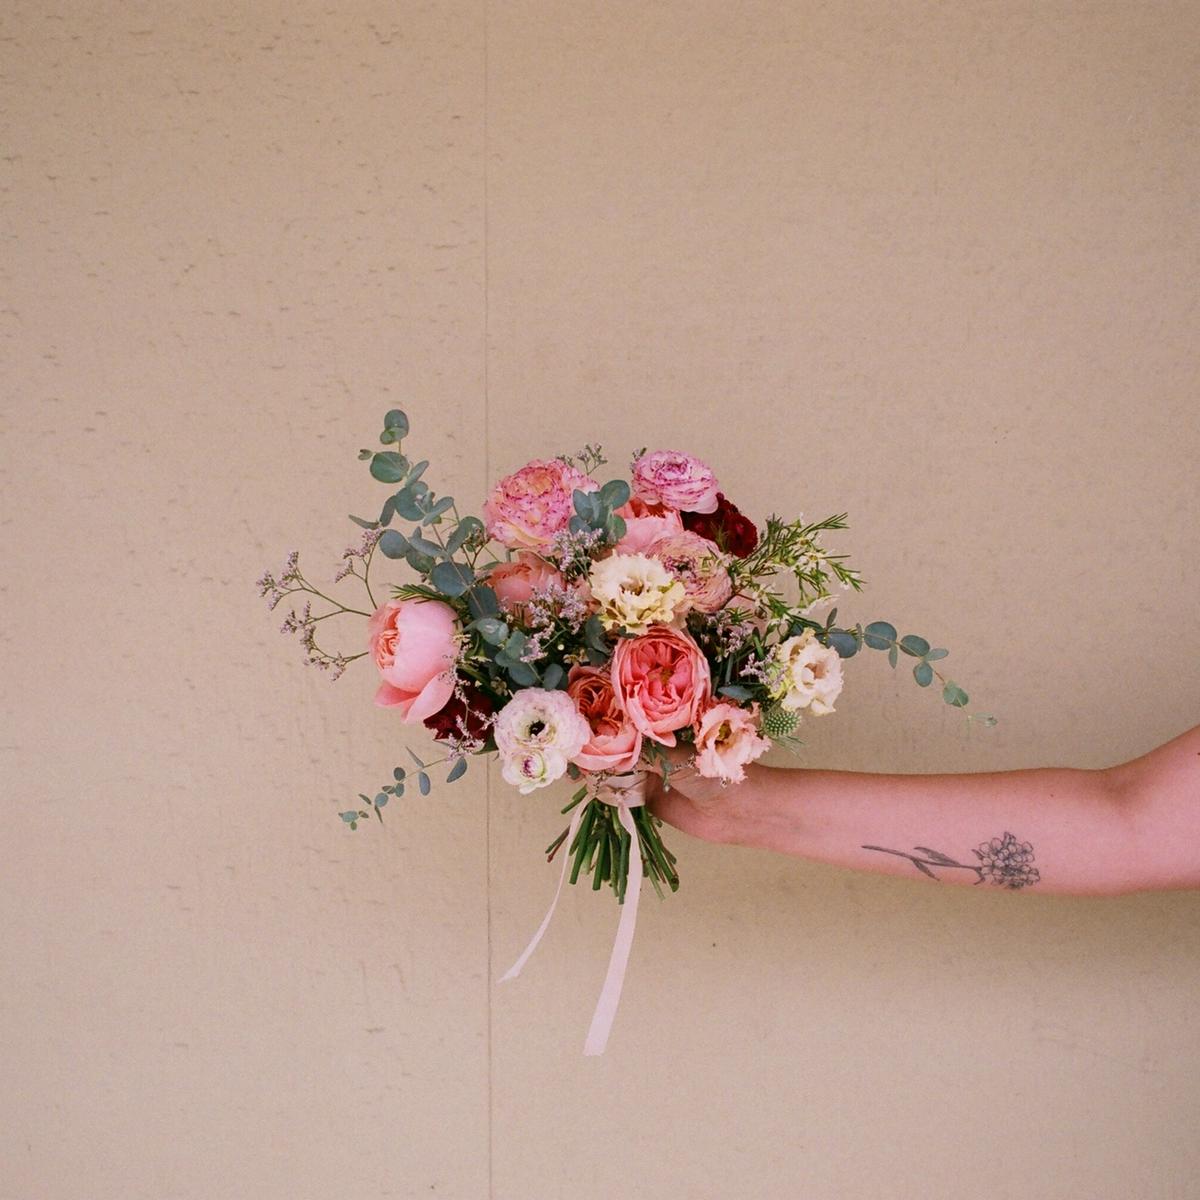 Flower Arrangements | Wedding Flowers | Floral Design in Orange County, CA | Florist in Seal Beach, California